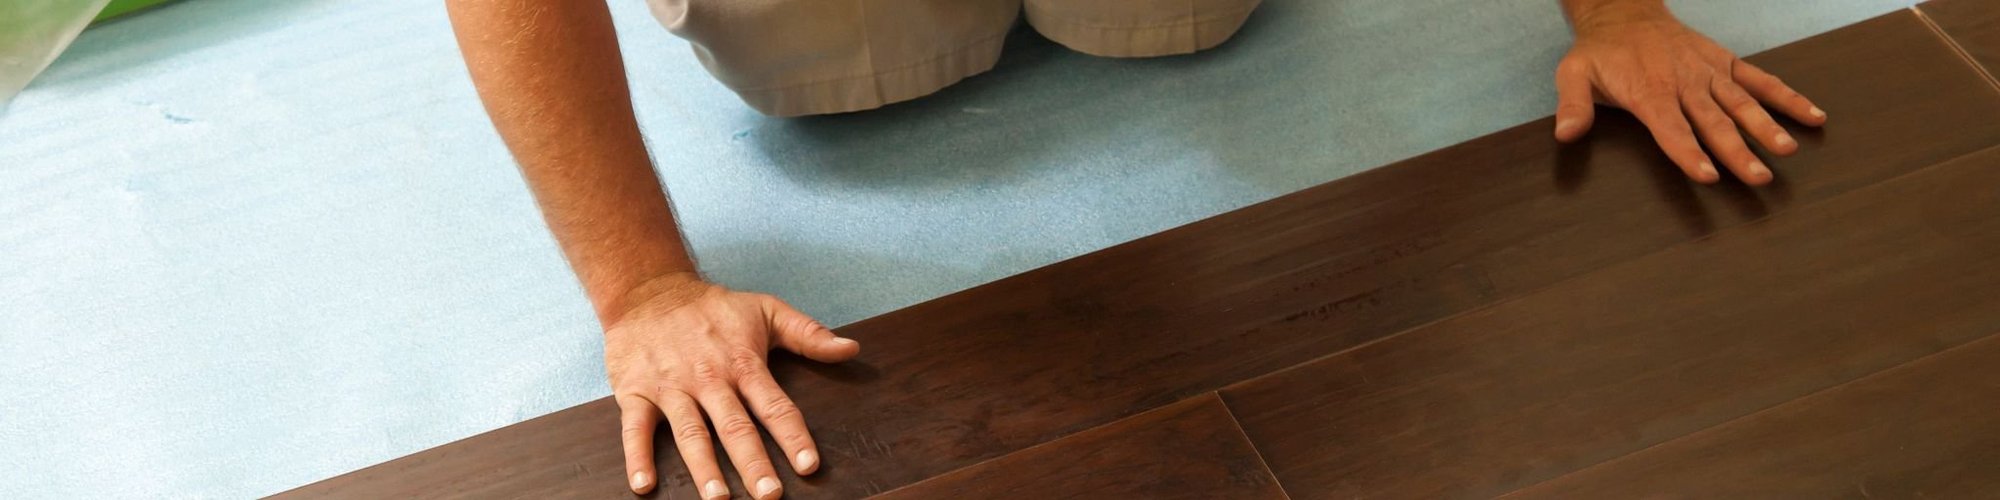 man laying down hardwood flooring - Cut-Rite Carpets & Design Center in NY